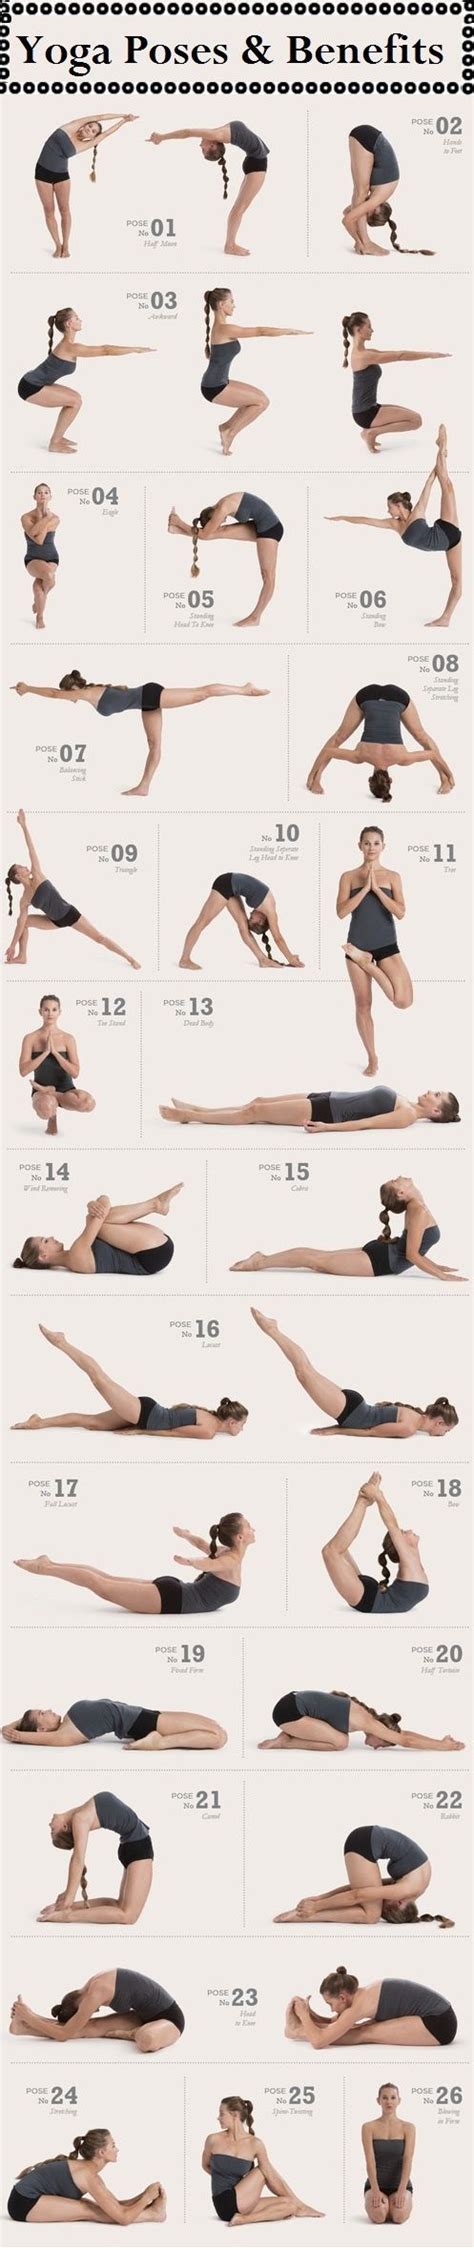 poses   bikram love  sequence yoga yoga